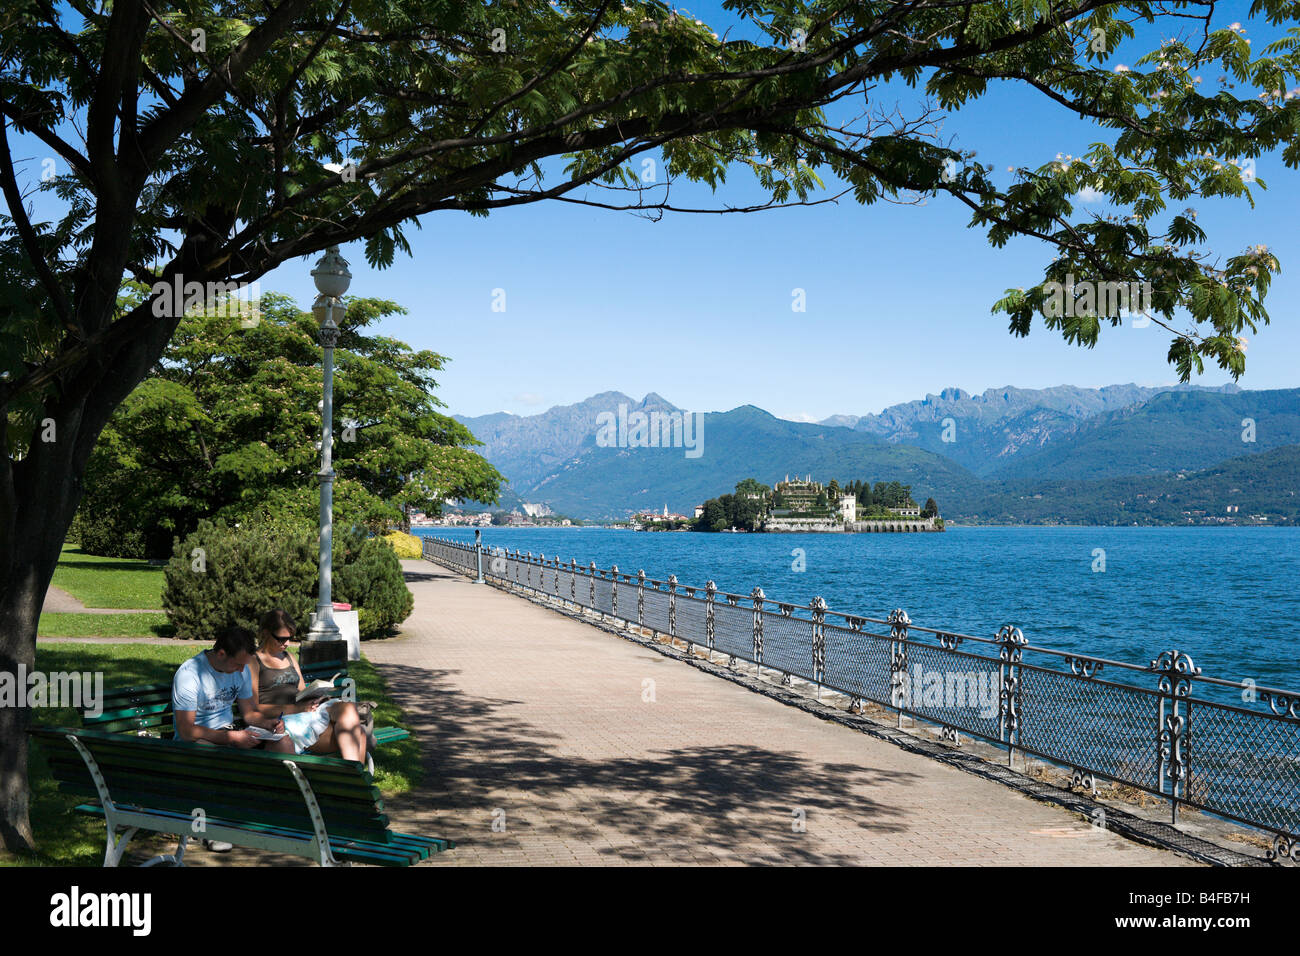 Promenade on the lakefront at Stresa looking towards Isola Bella (one of the Isole Borromee), Lake Maggiore, Italy Stock Photo